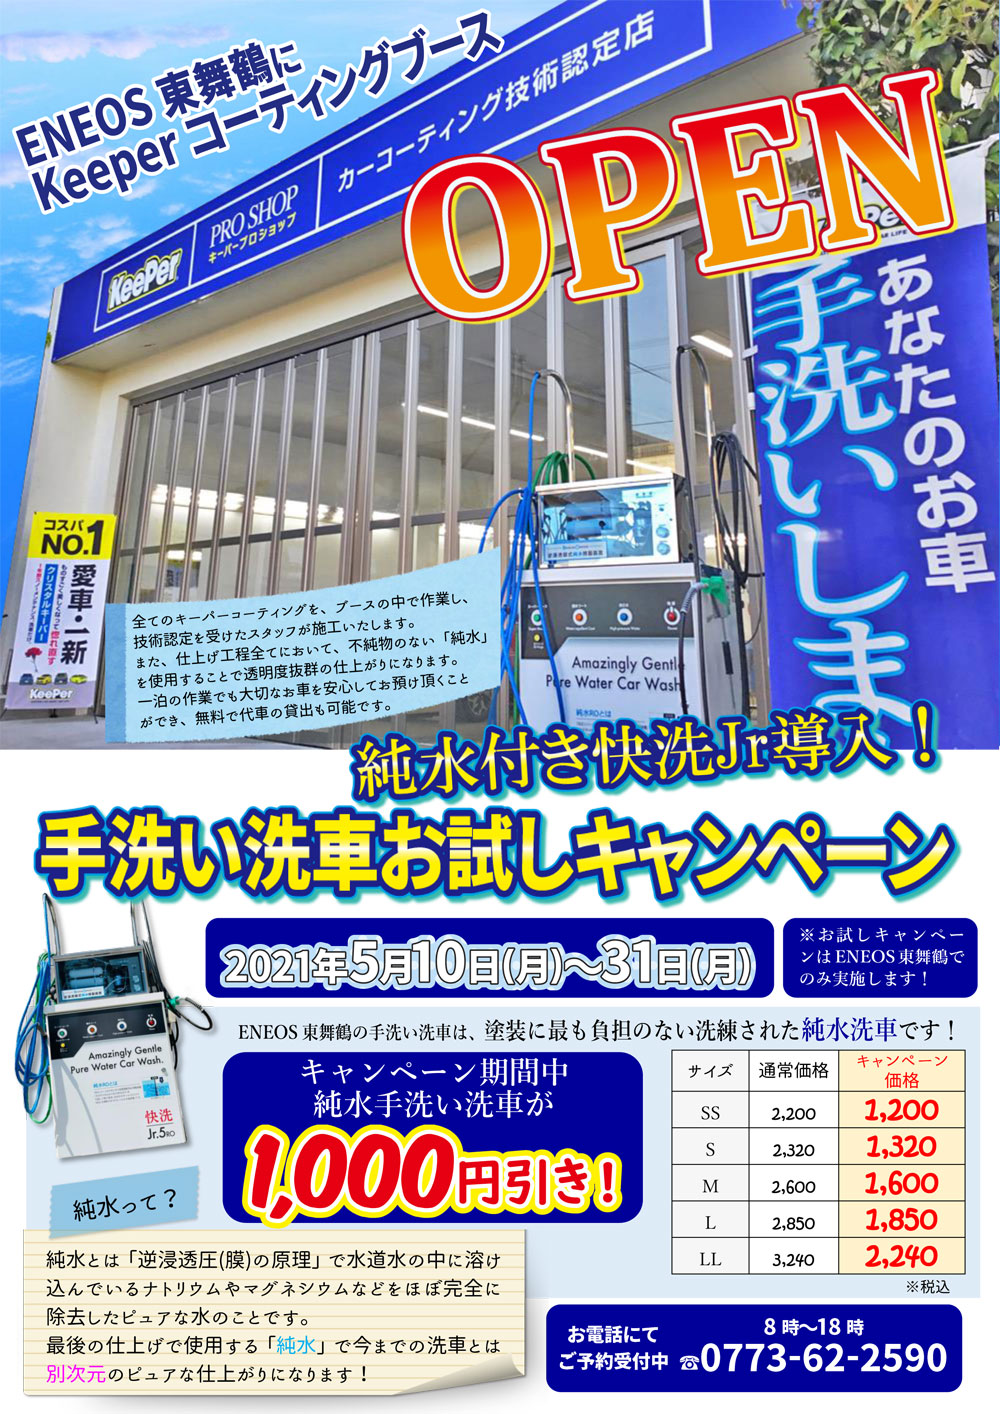 Eneos東舞鶴 純水手洗い洗車キャンペーン開催 カーライフサポート 江守石油株式会社